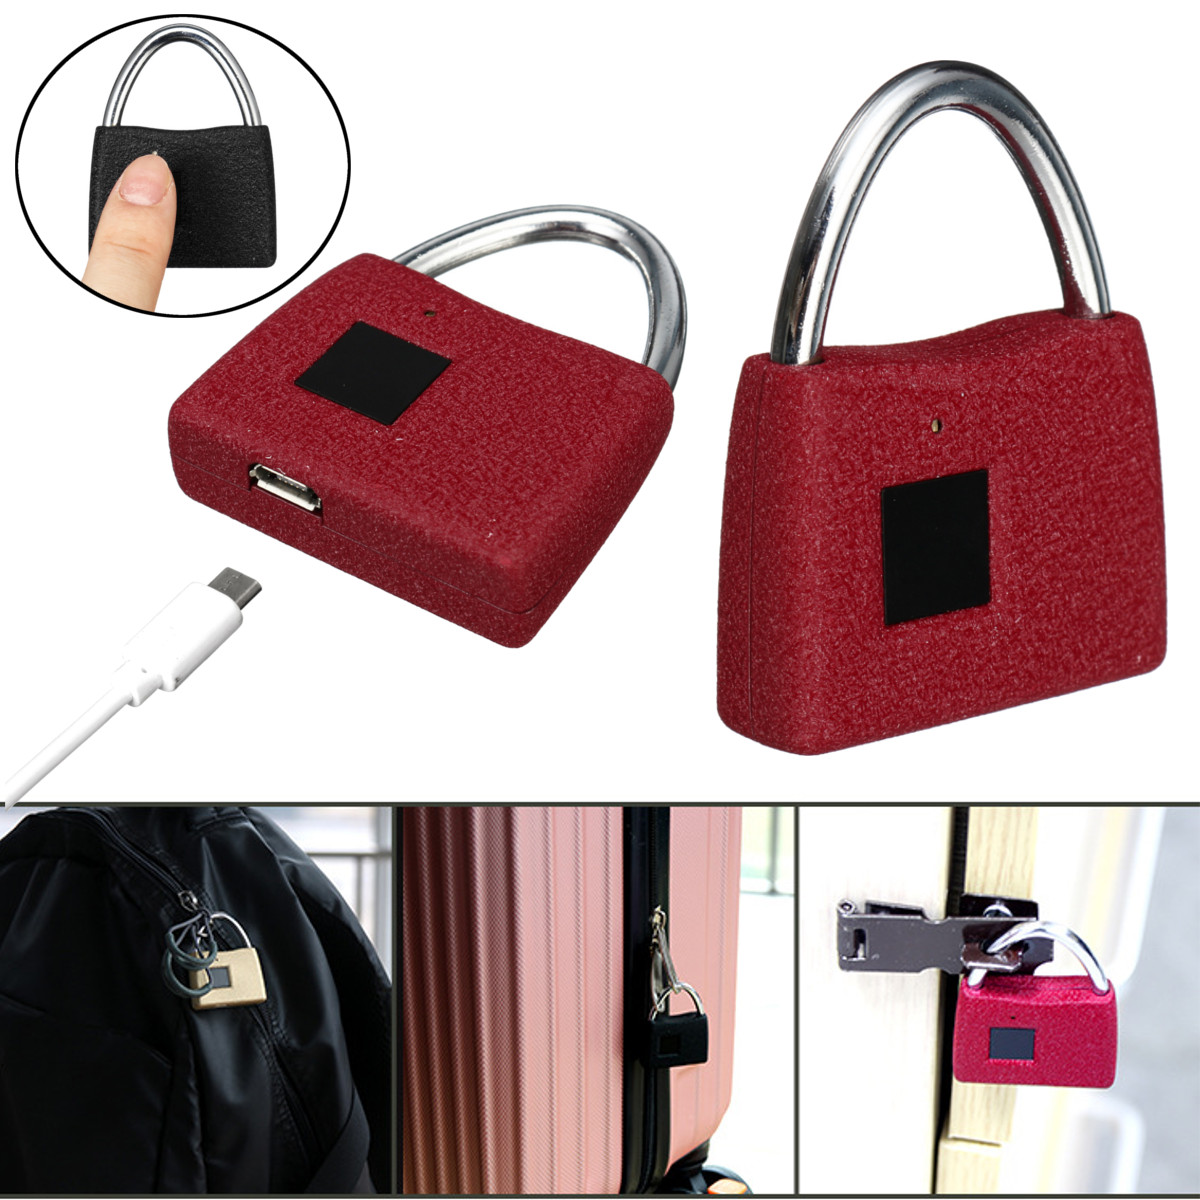 Portable-Smart-Keyless-Luggage-Door-Lock-Anti-Theft-Fingerprint-Security-Padlock-1456418-3